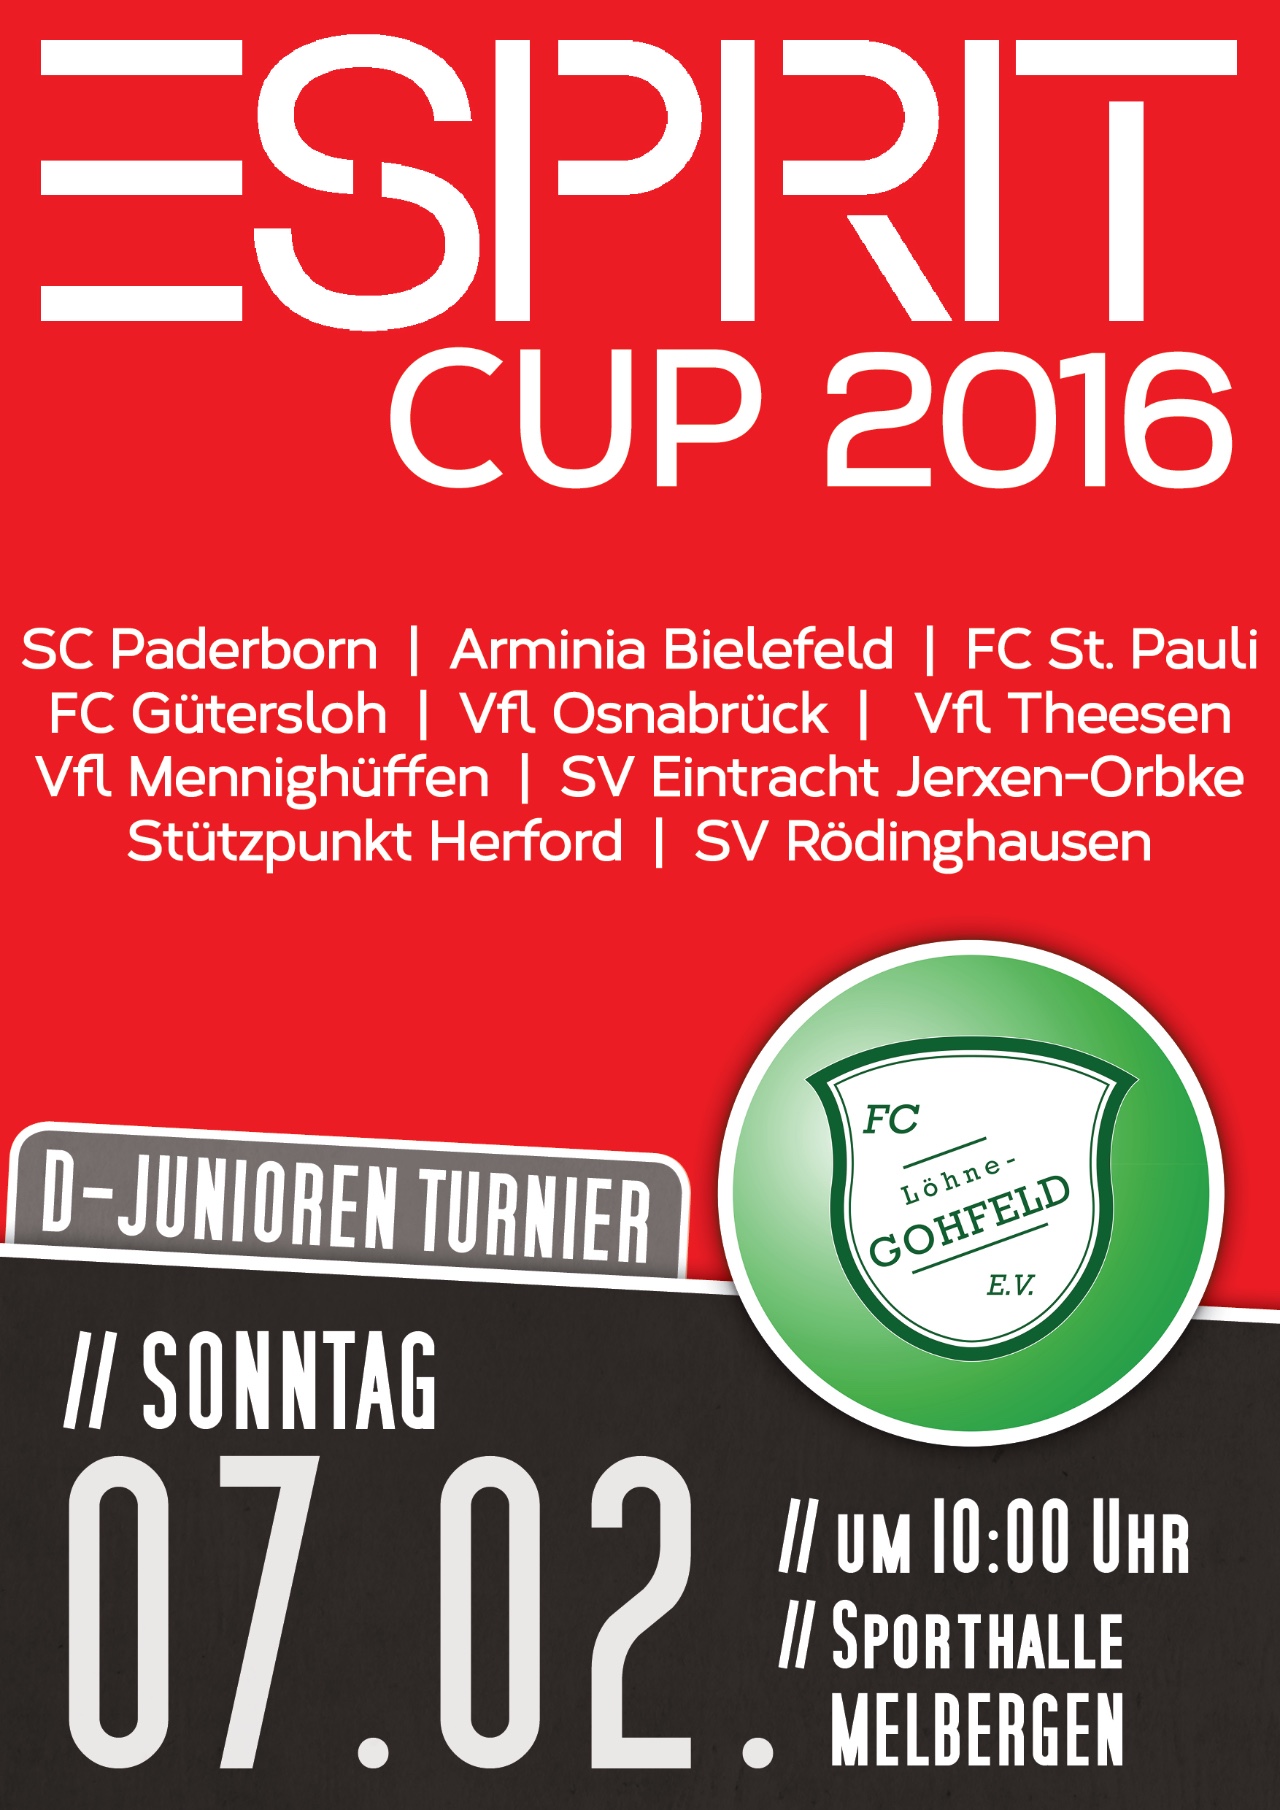 ESPRIT-Cup 2016